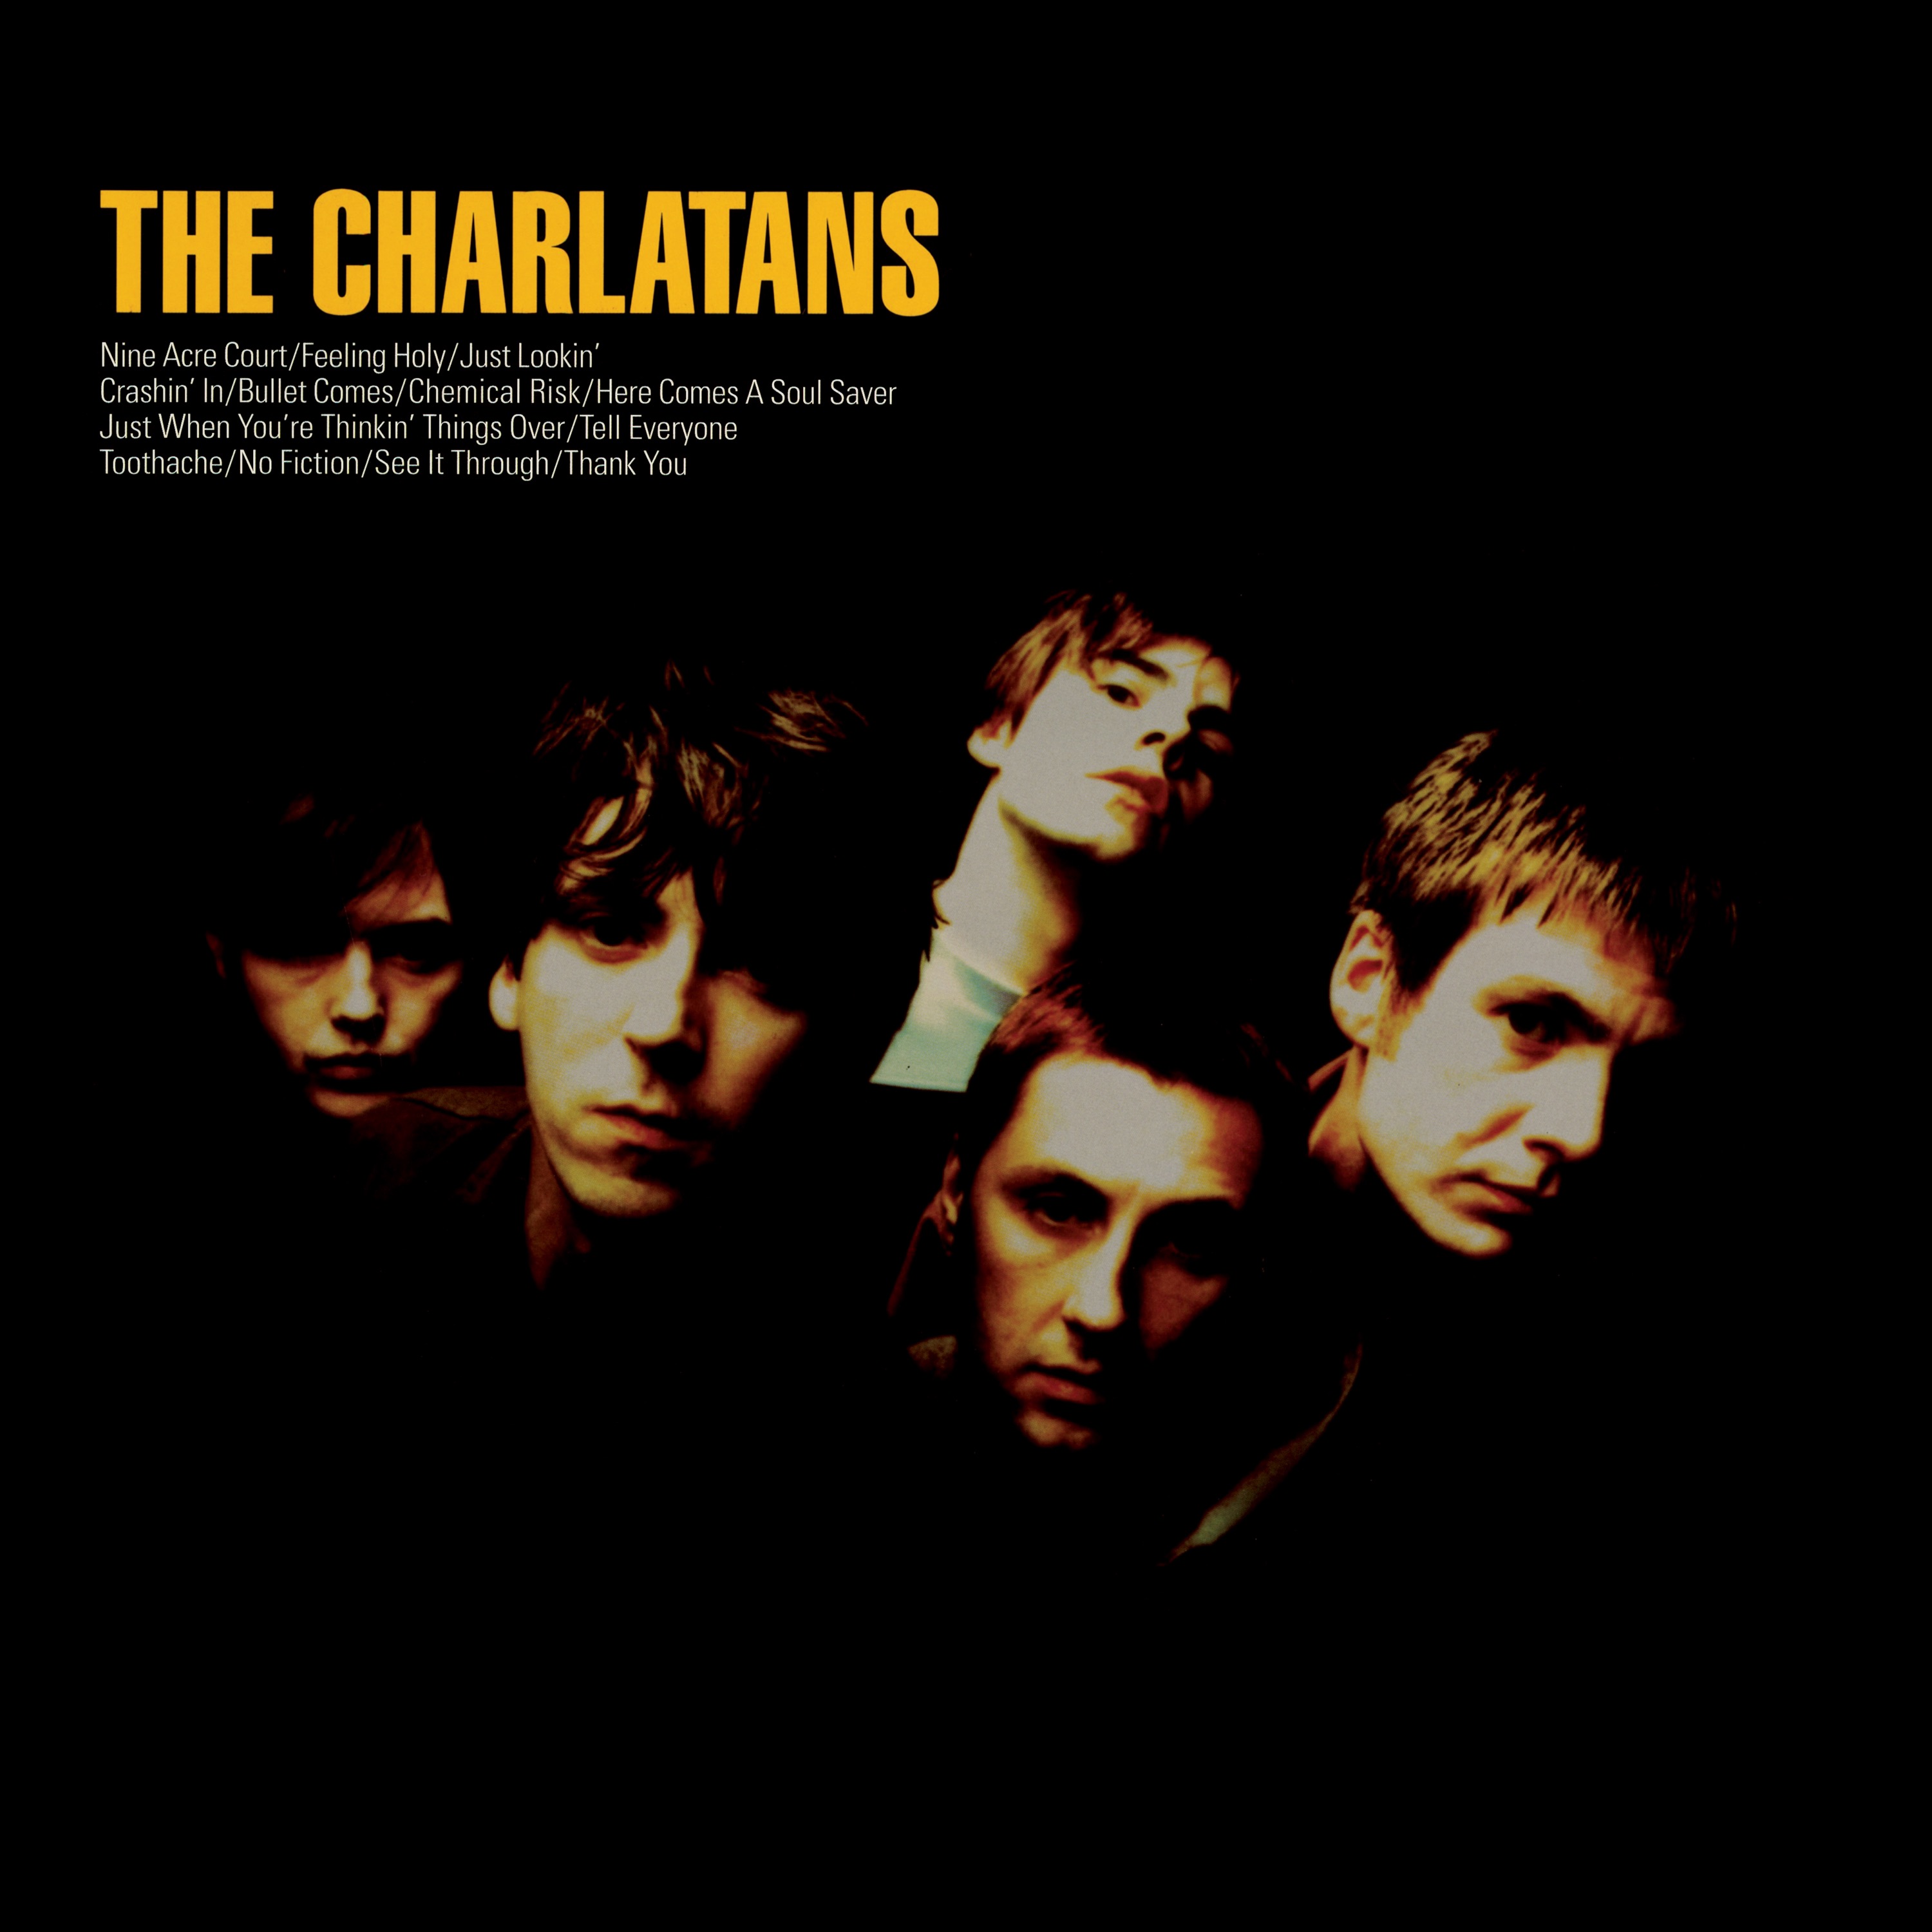 The Charlatans - The Charlatans (Marble yellow vinyl